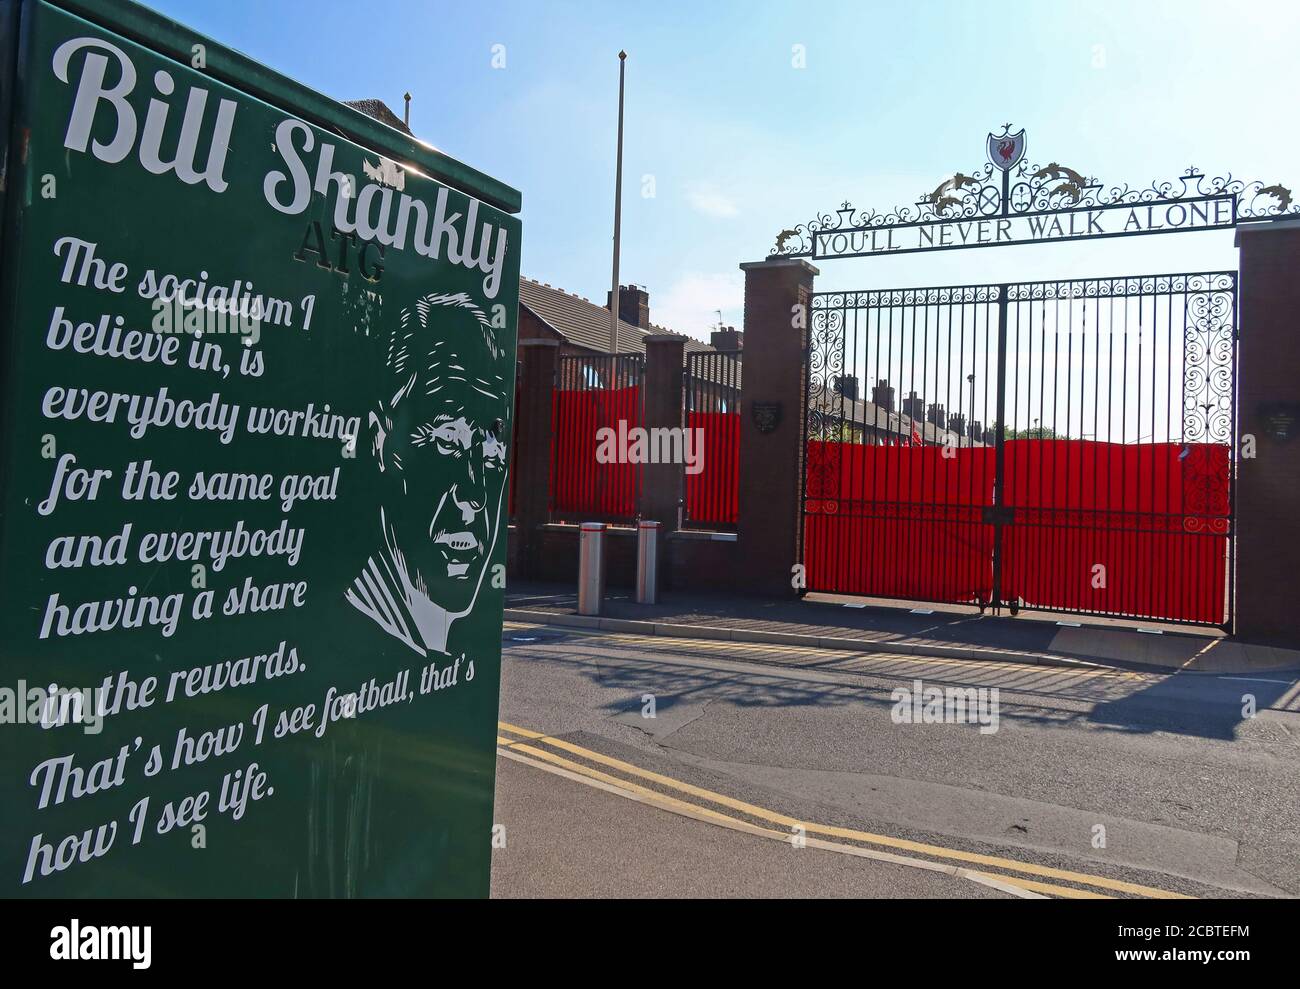 Bill Shankly,You will never walk alone gates, LFC,Liverpool Football Club, Anfield, Premier League, Merseyside,North West England, UK, L4 2UZ Stock Photo